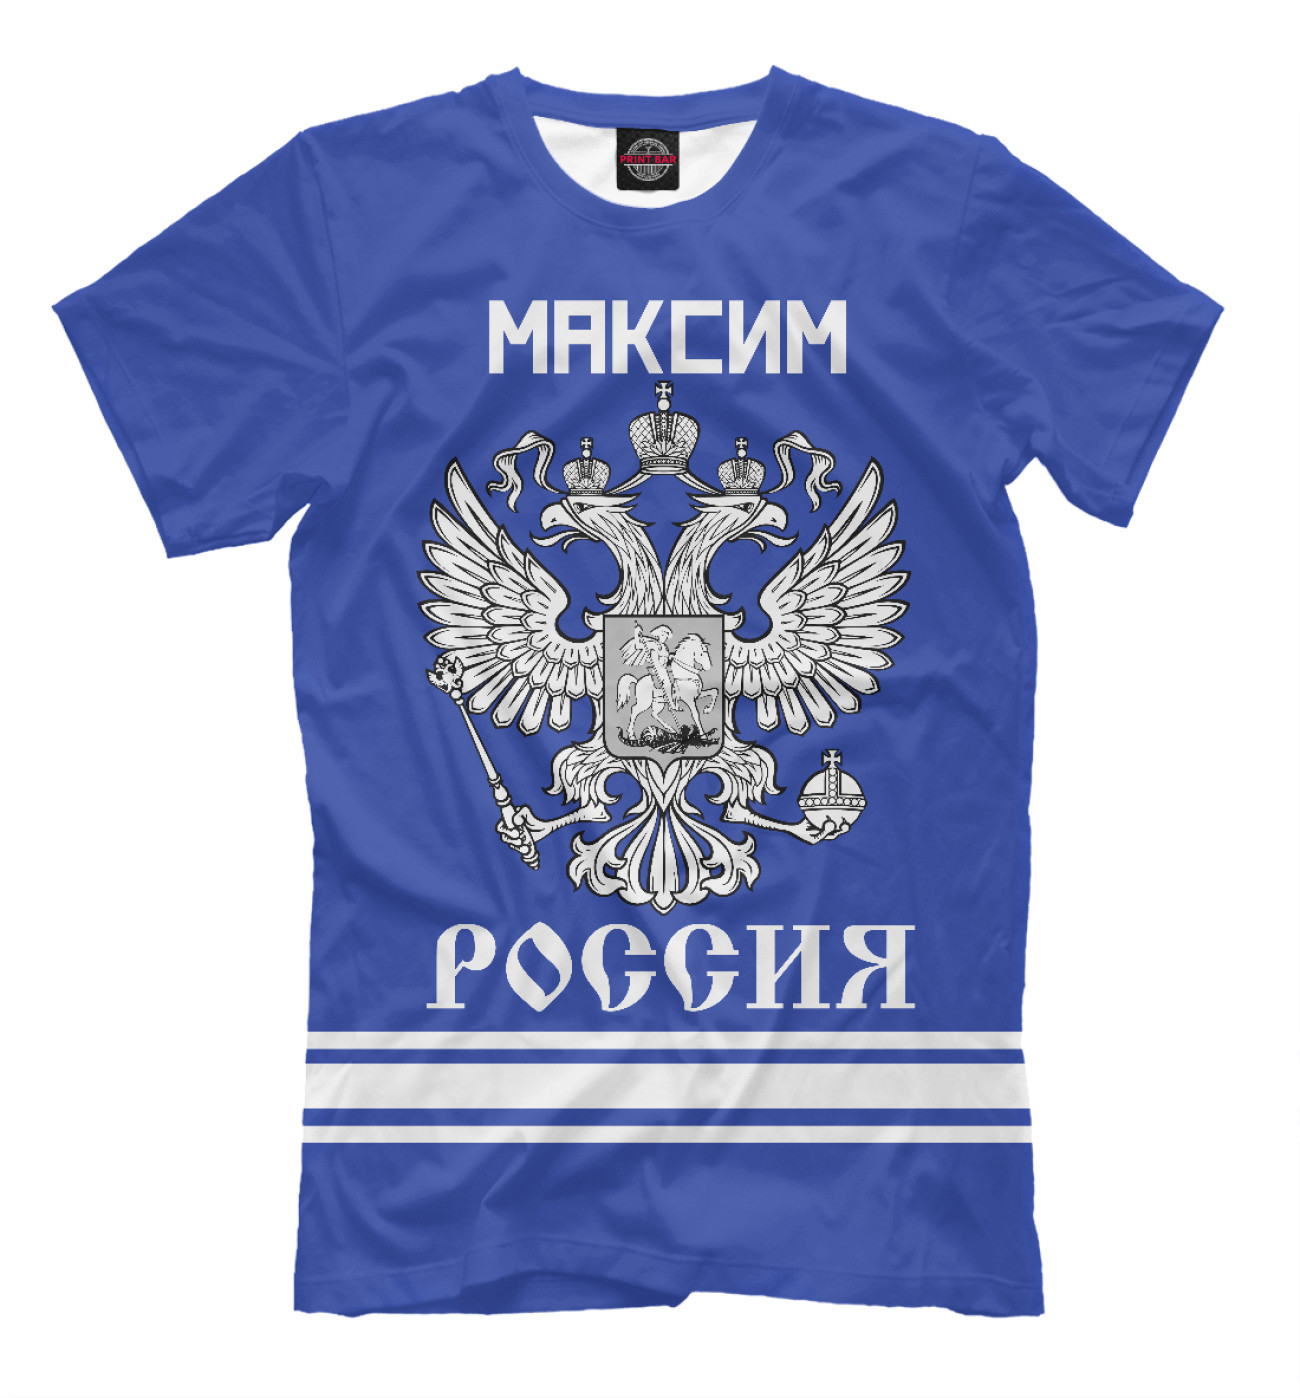 Мужская Футболка МАКСИМ sport russia collection, артикул: MAX-671716-fut-2